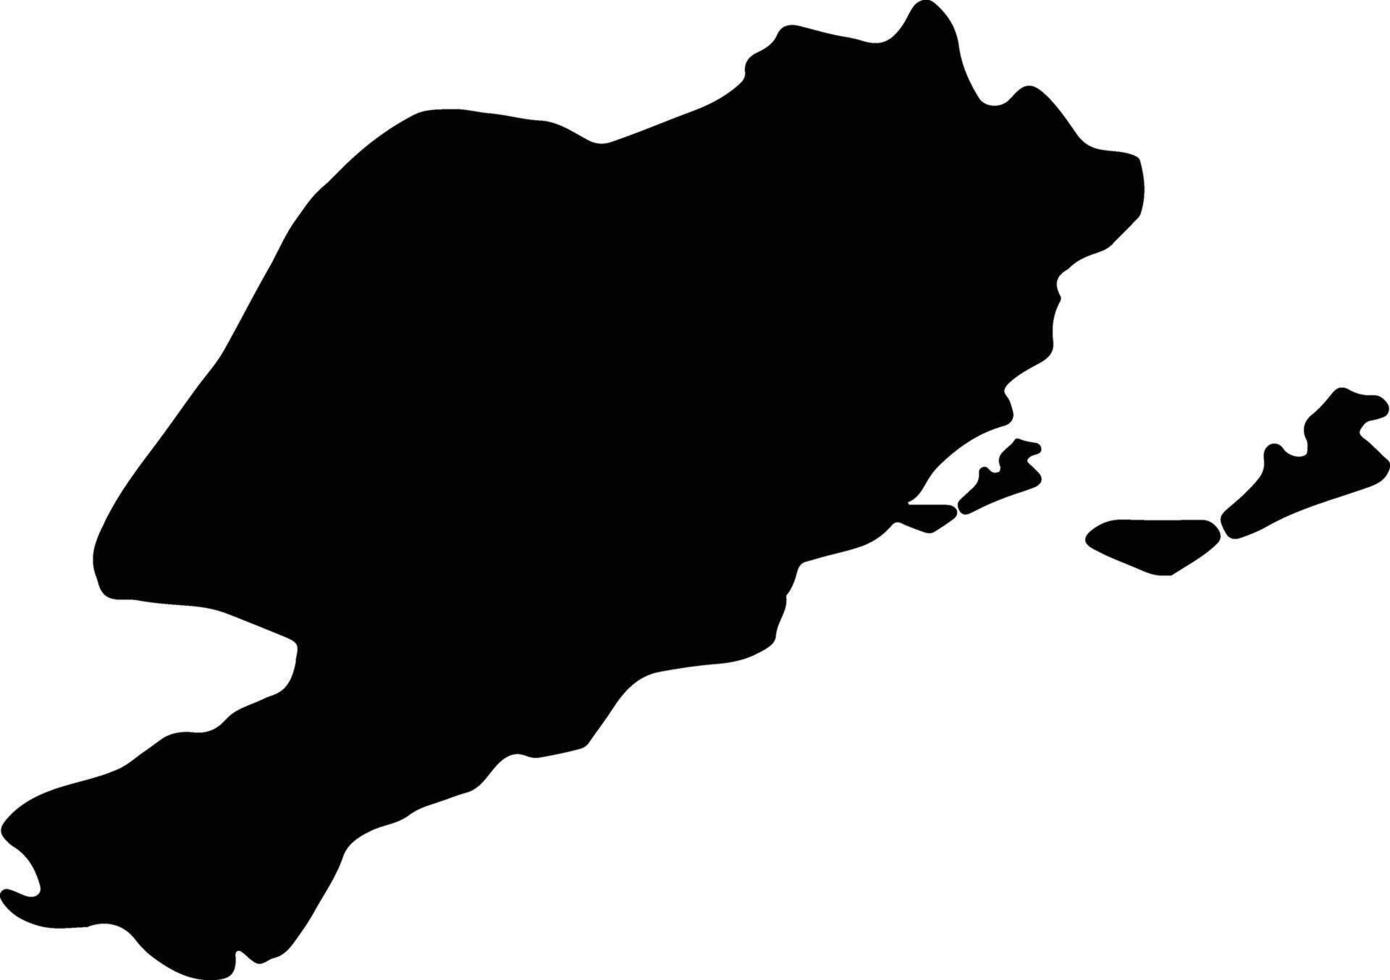 sfax Tunesië silhouet kaart vector